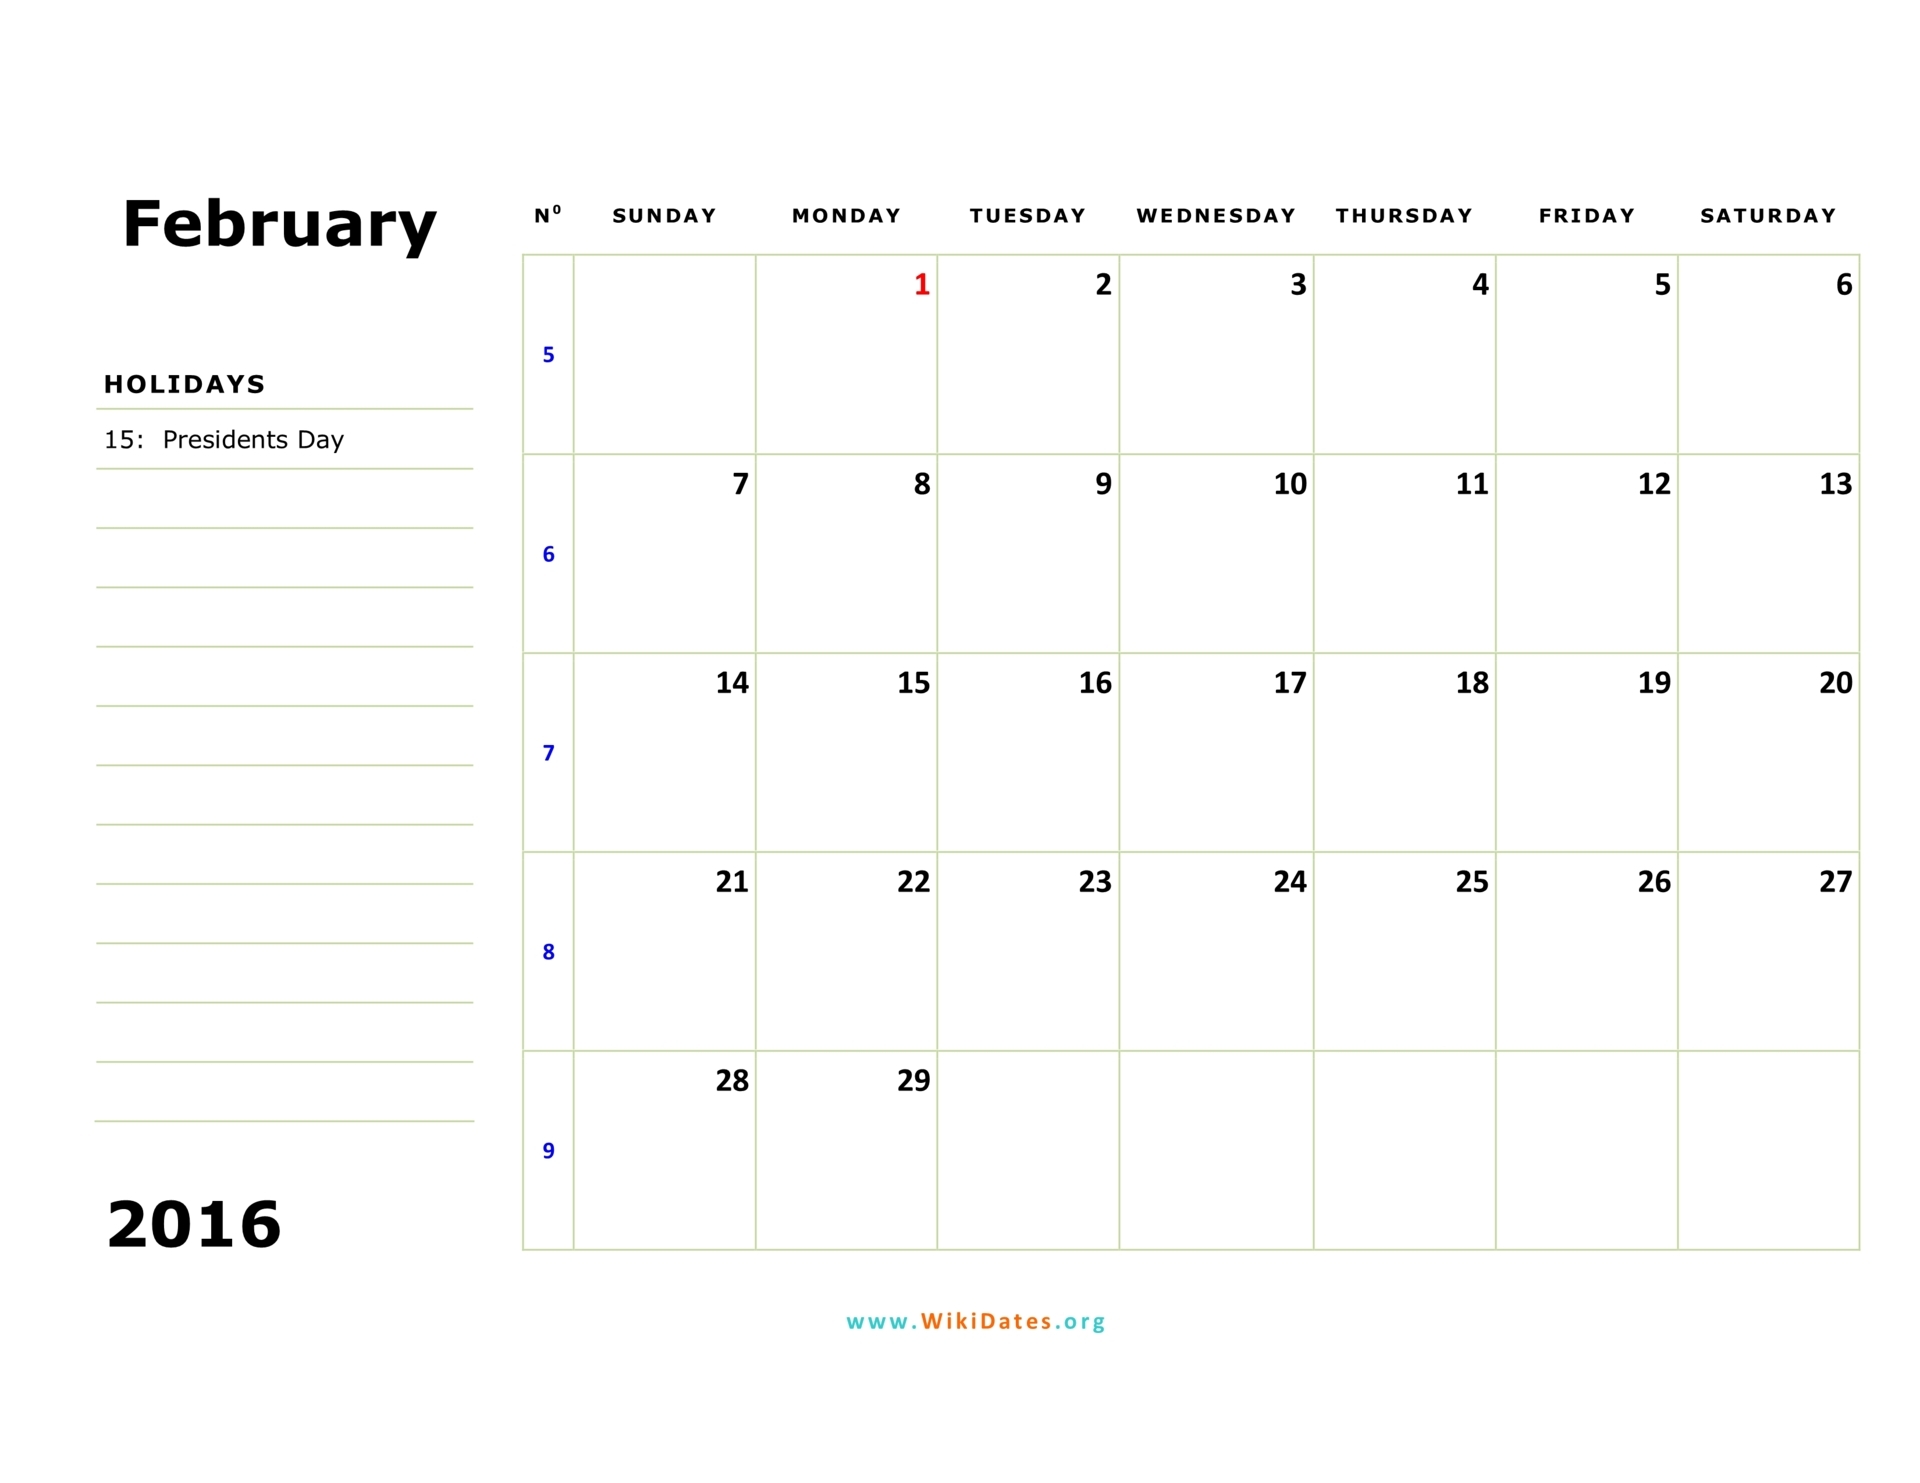 February 2016 Calendar WikiDates org